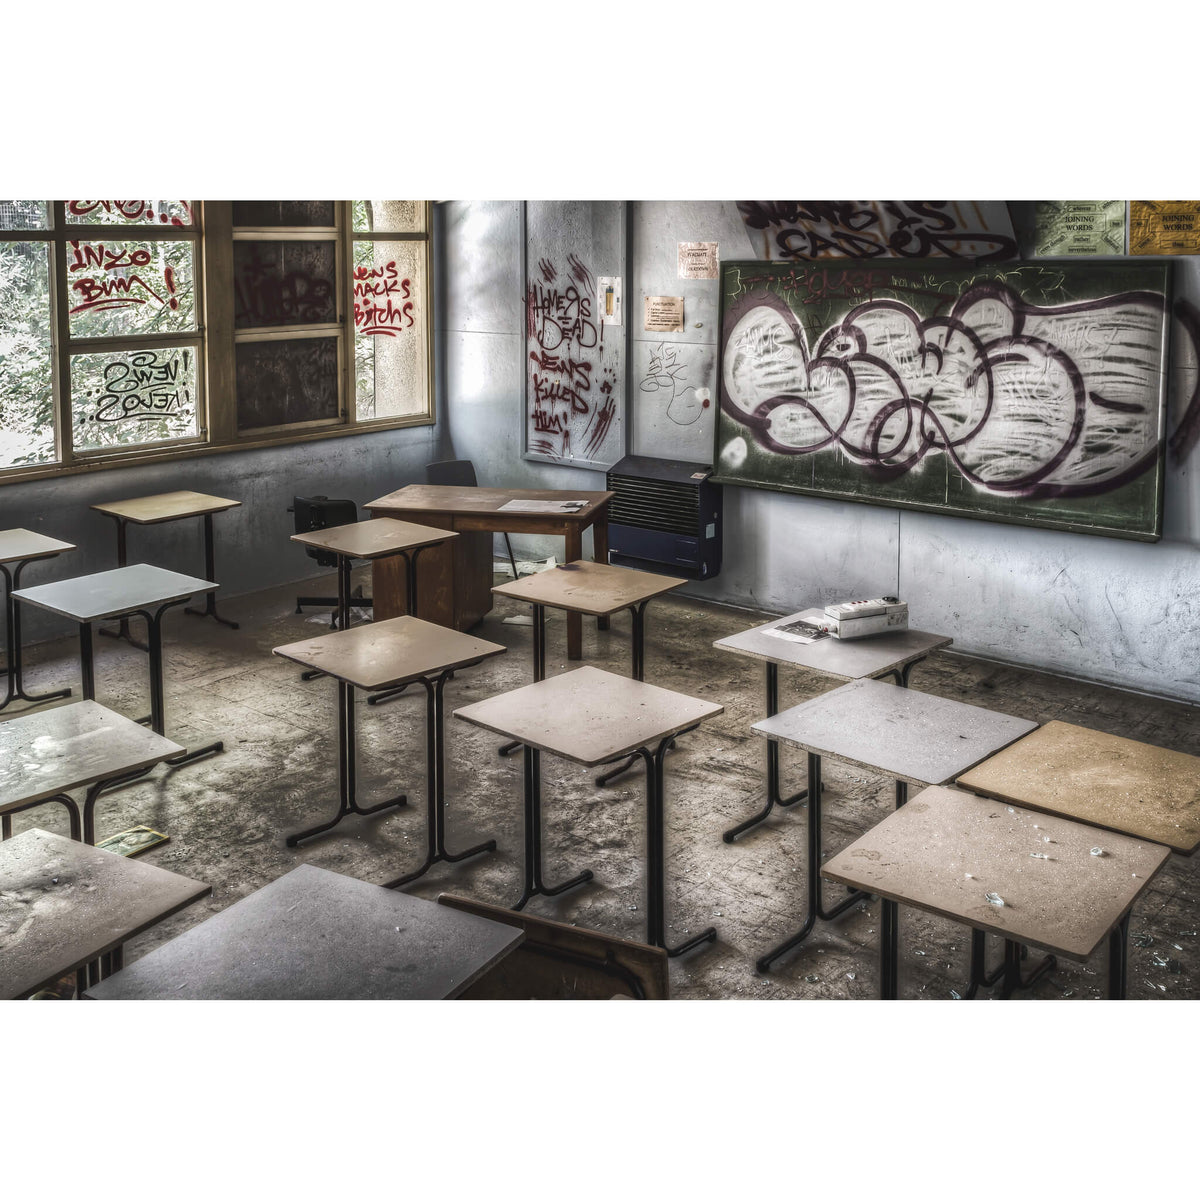 Classroom | Macquarie Boys Technology High Fine Art Print - Lost Collective Shop